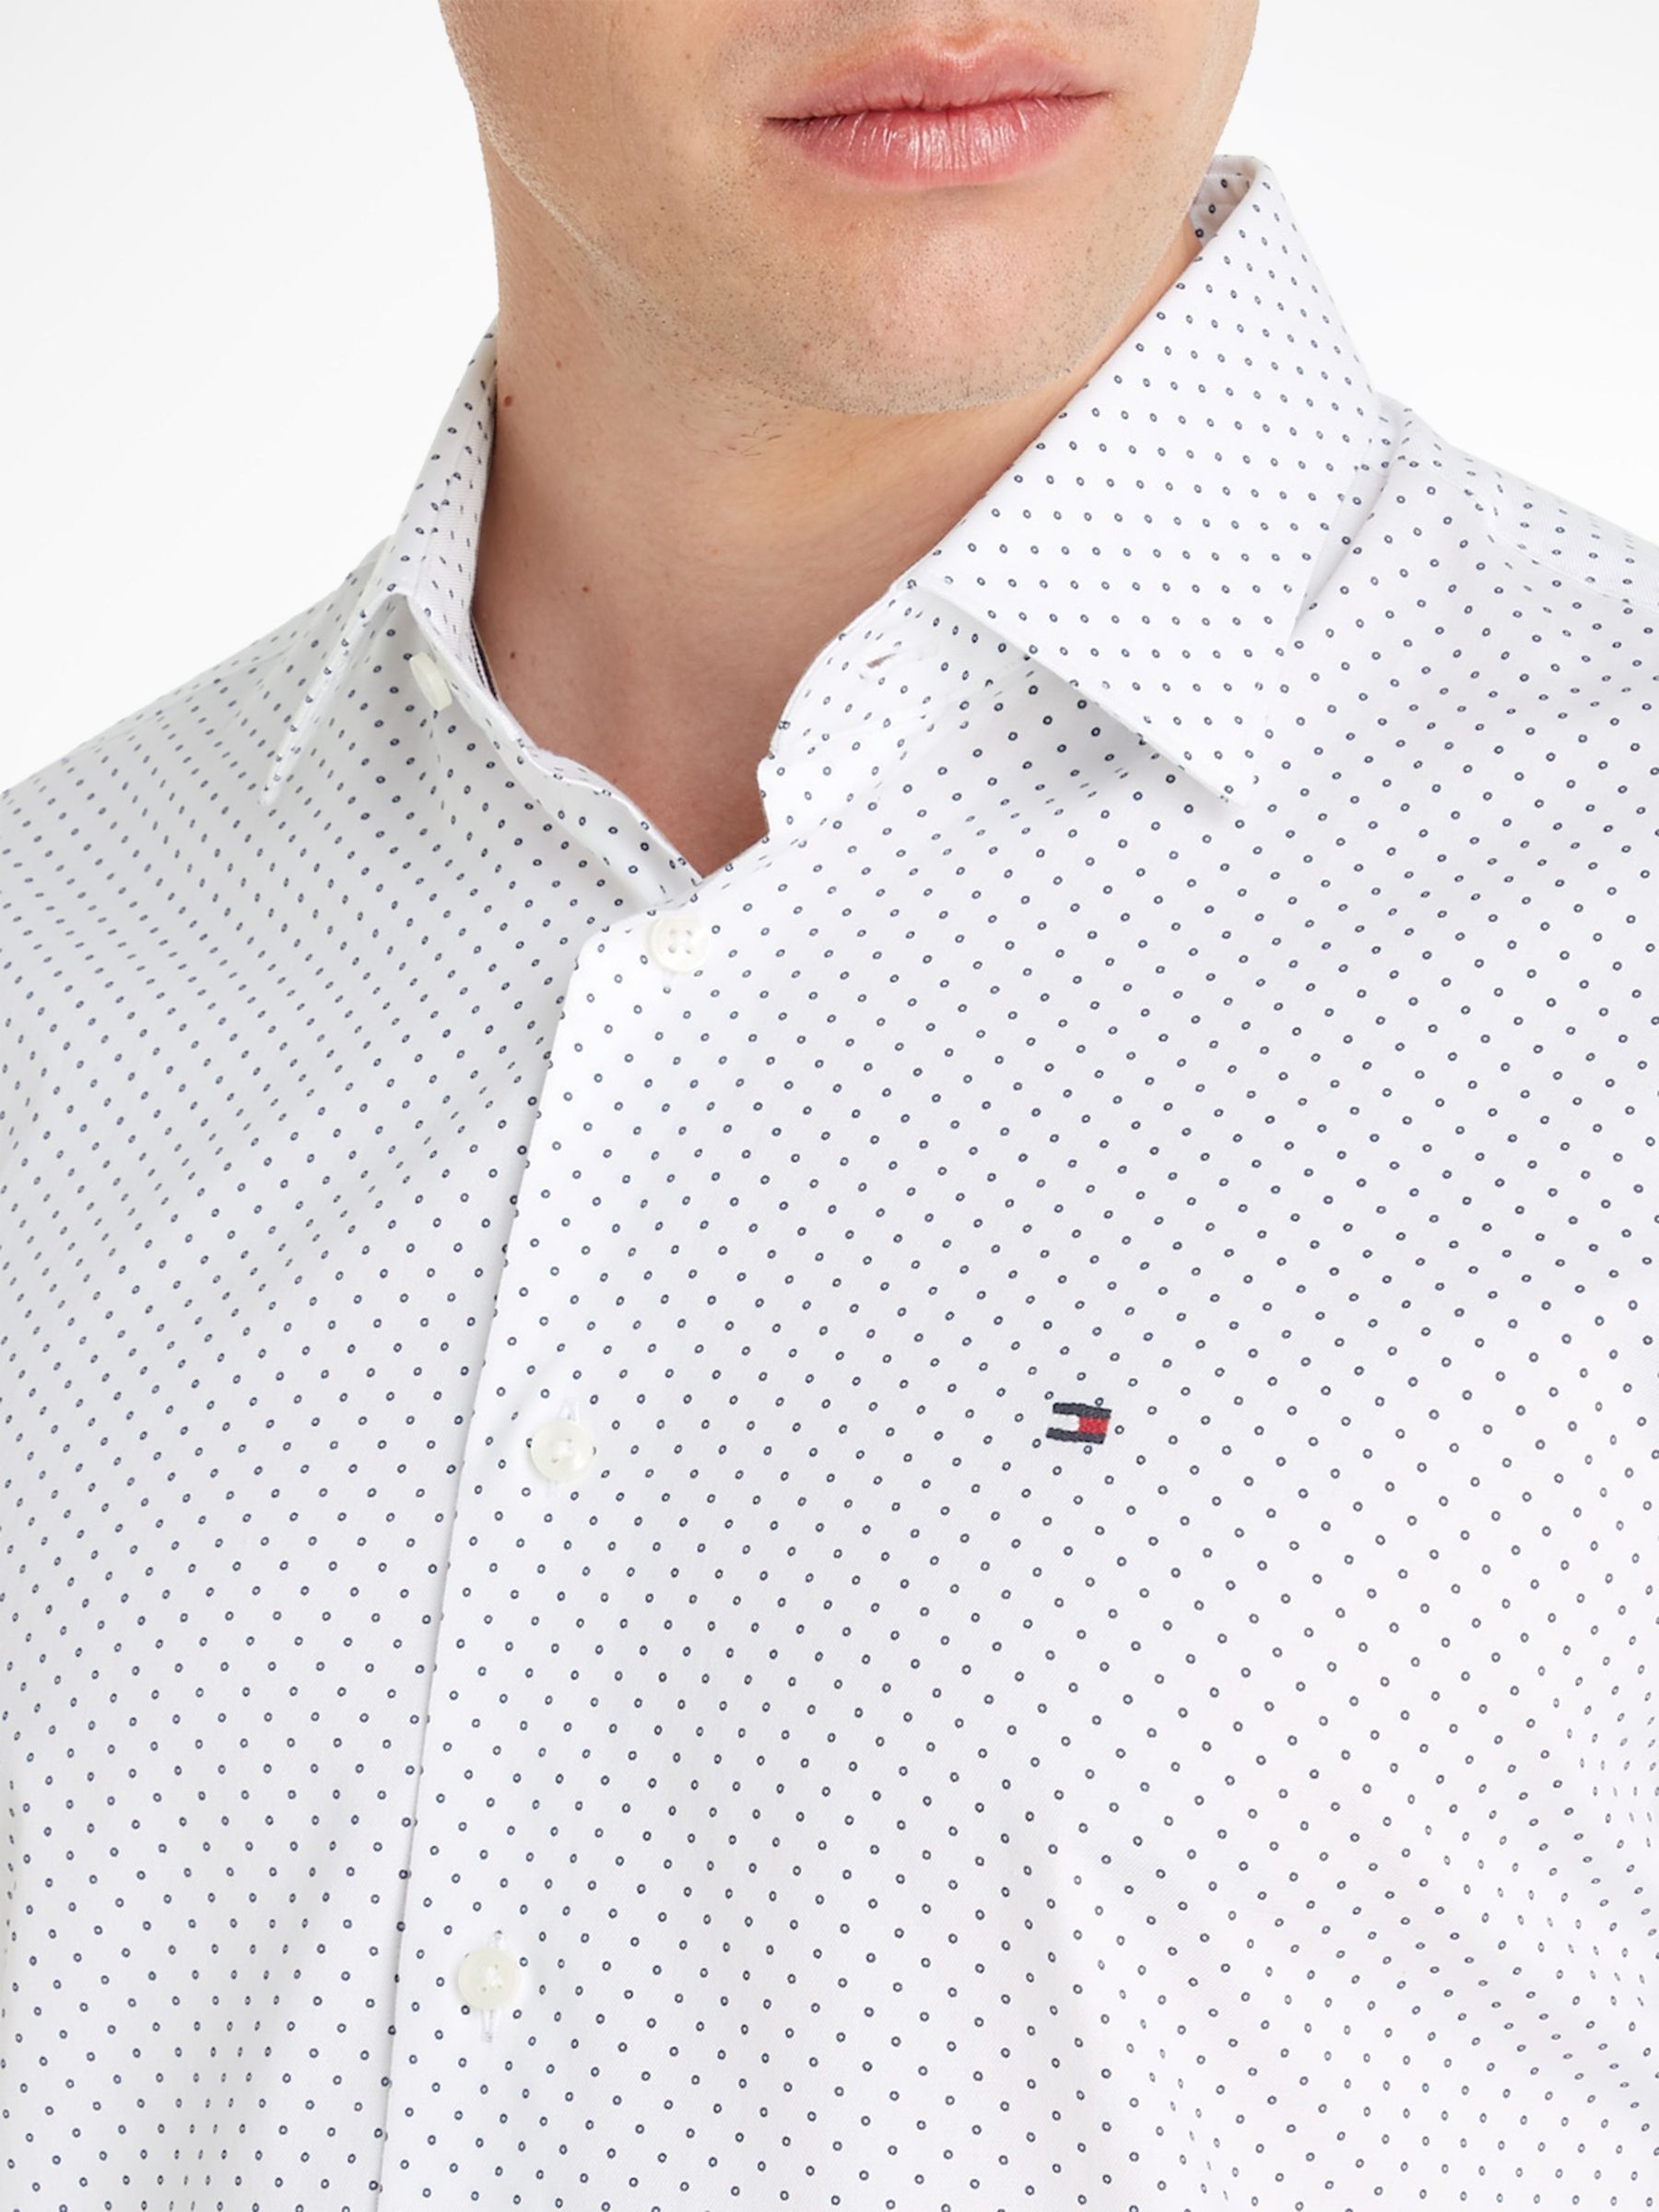 Tommy Hilfiger Dot Print Shirt, White/Navy, 38